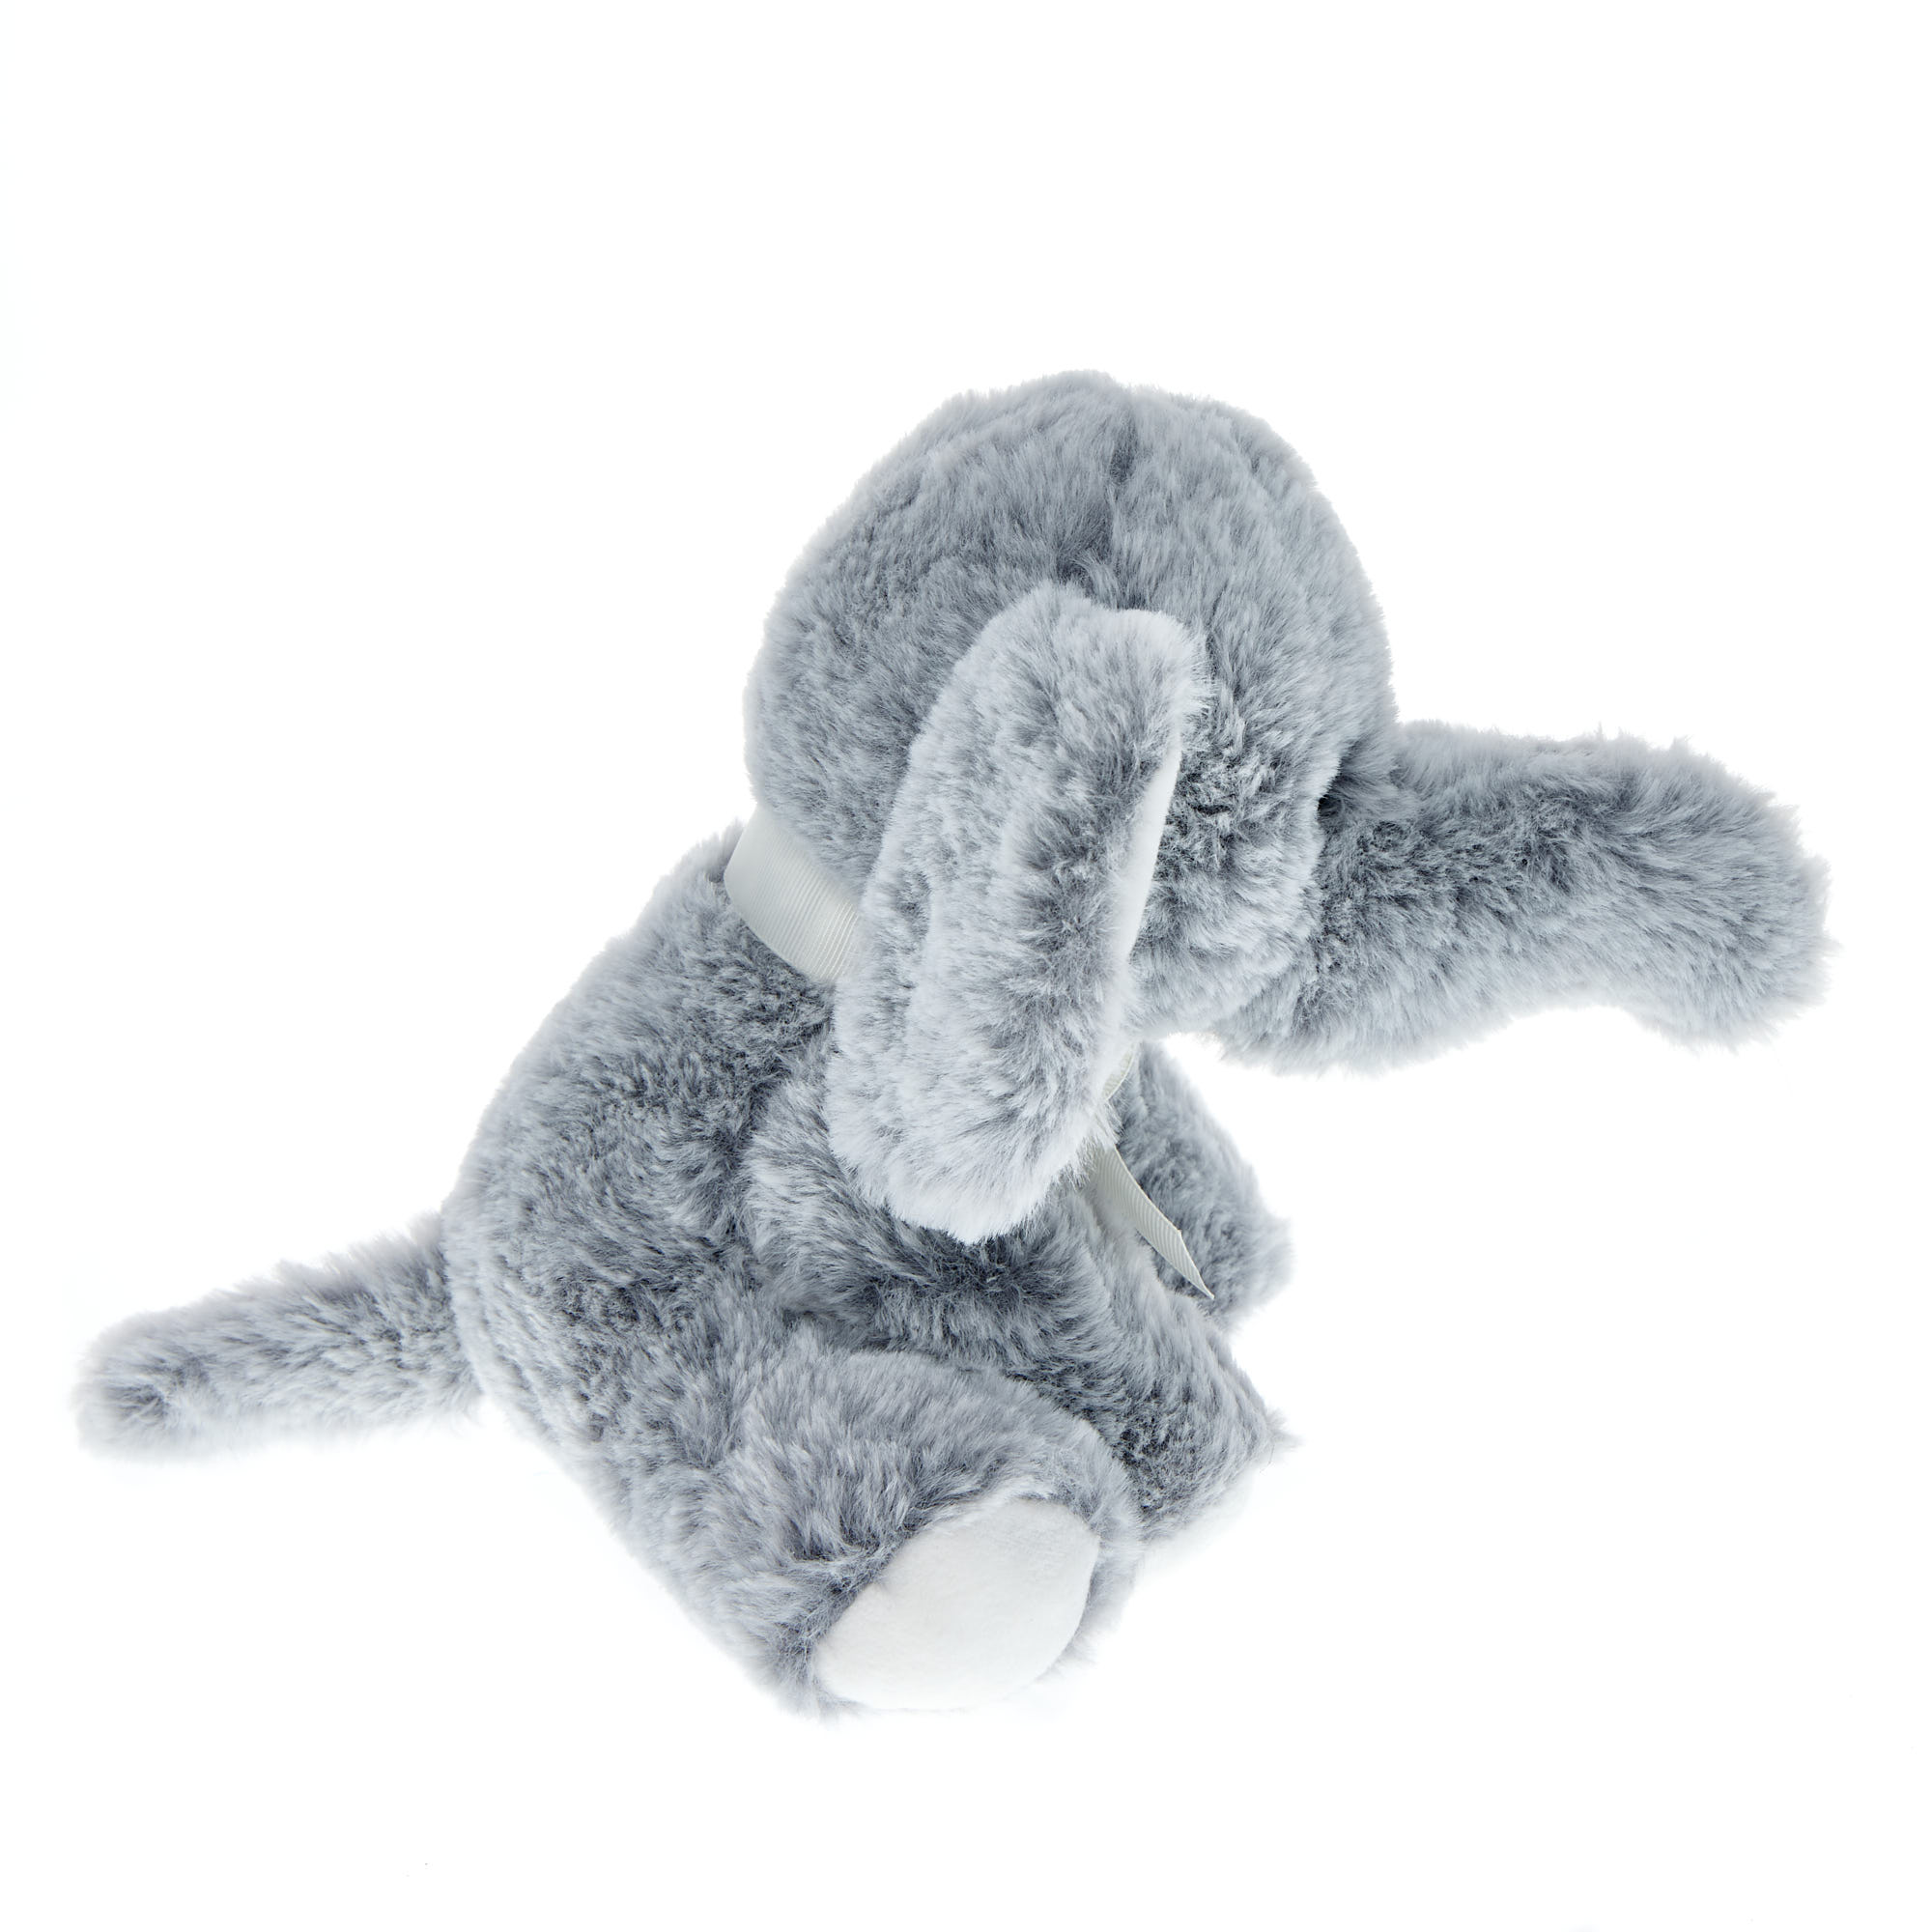 Small Elephant Soft Toy